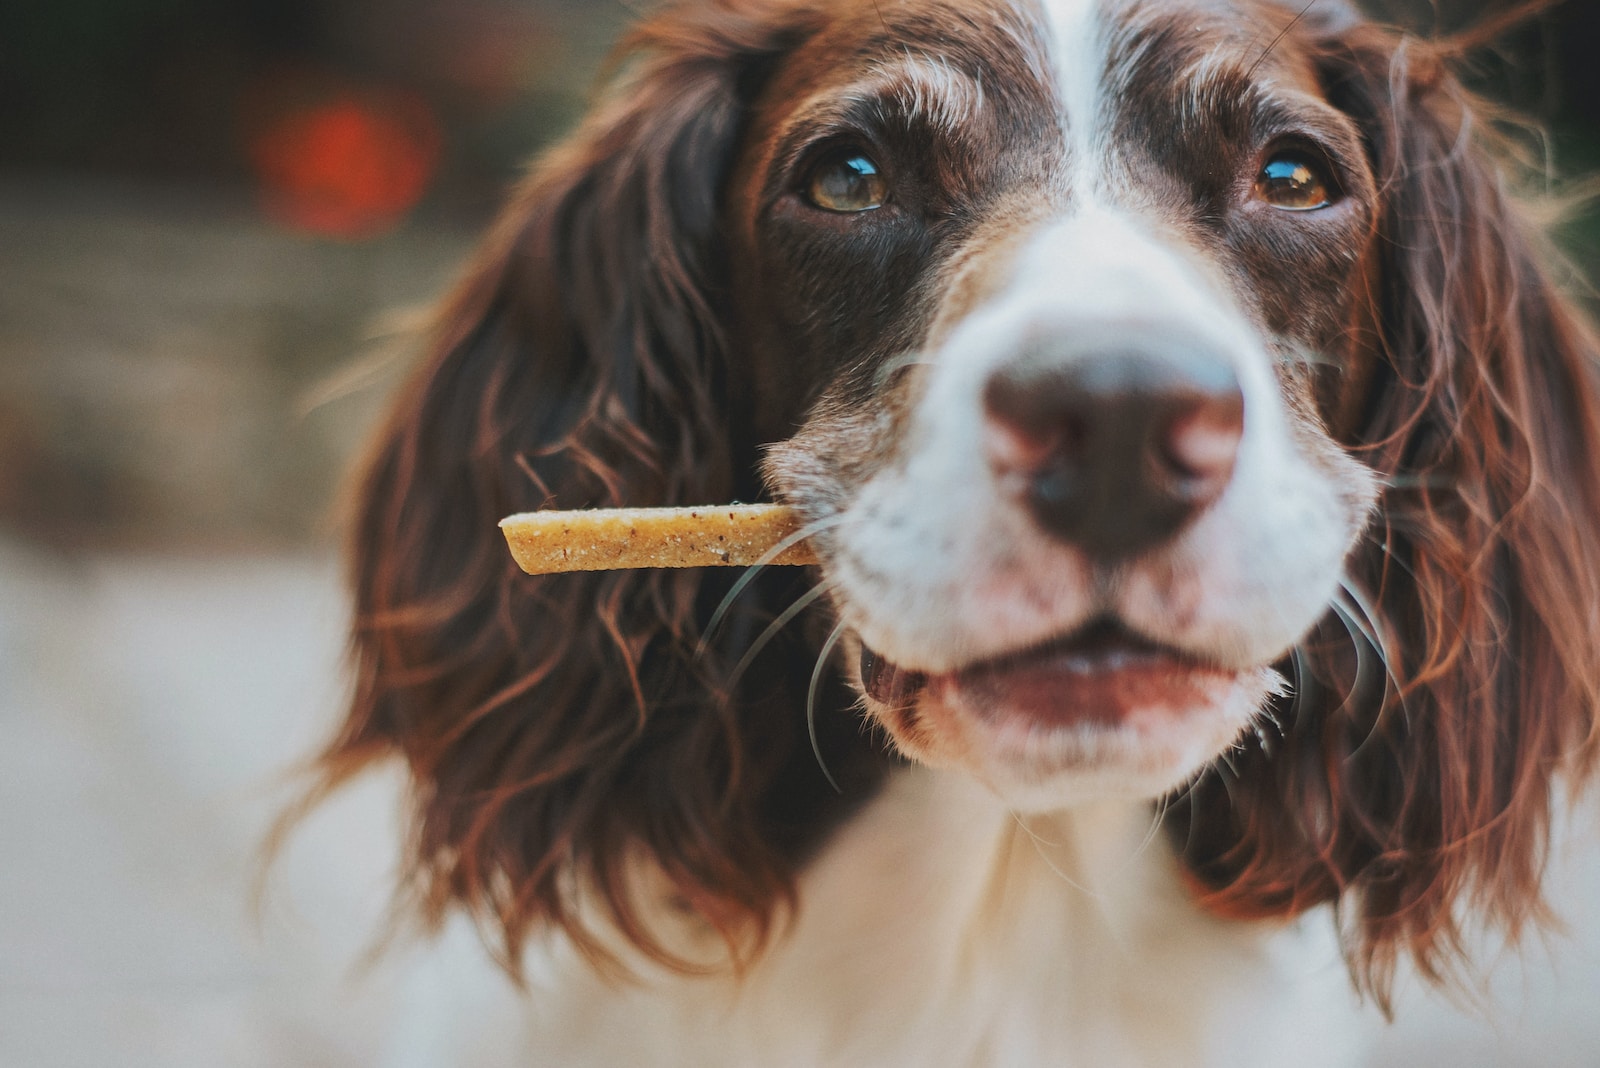 Homemade Dog Food: Benefits and Risks